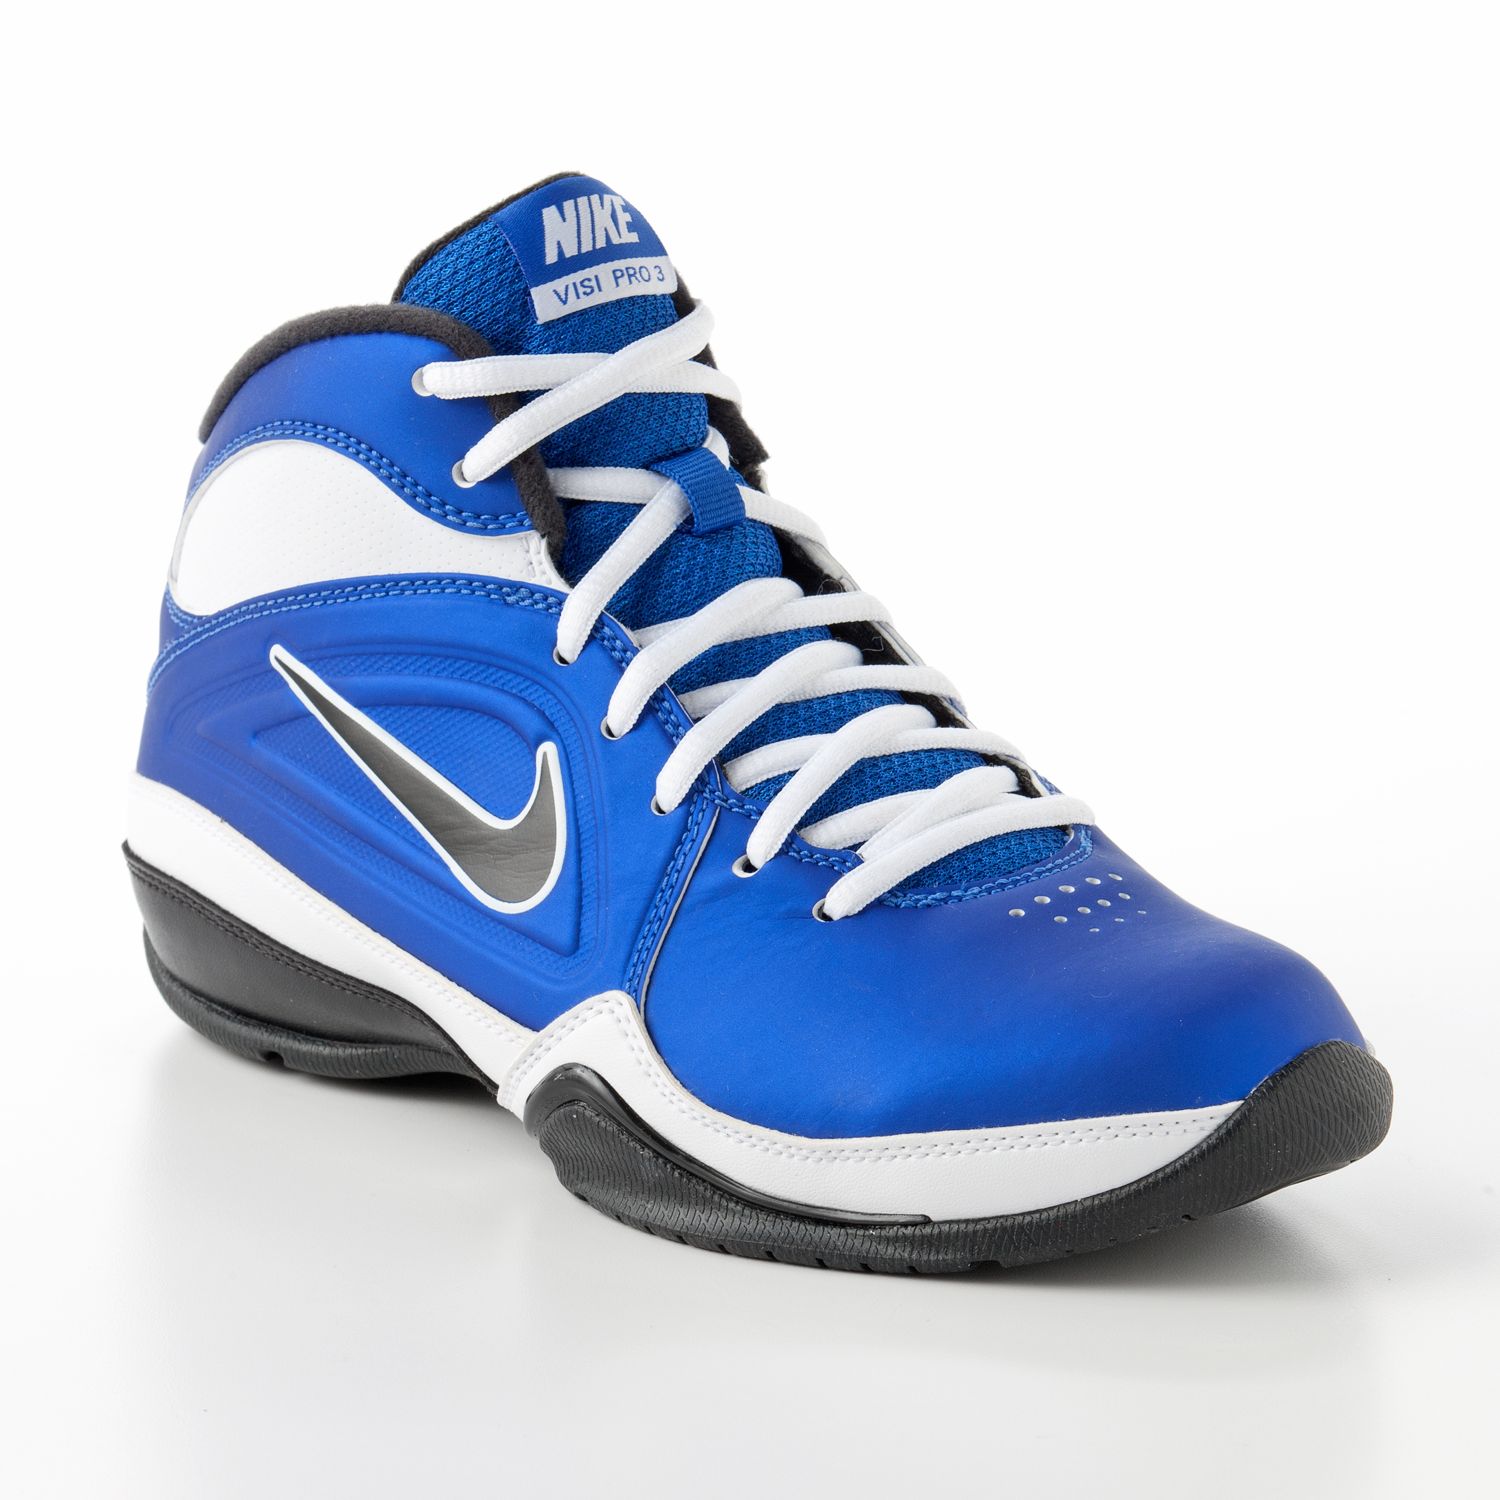 Nike Air Visi III Basketball Shoes 